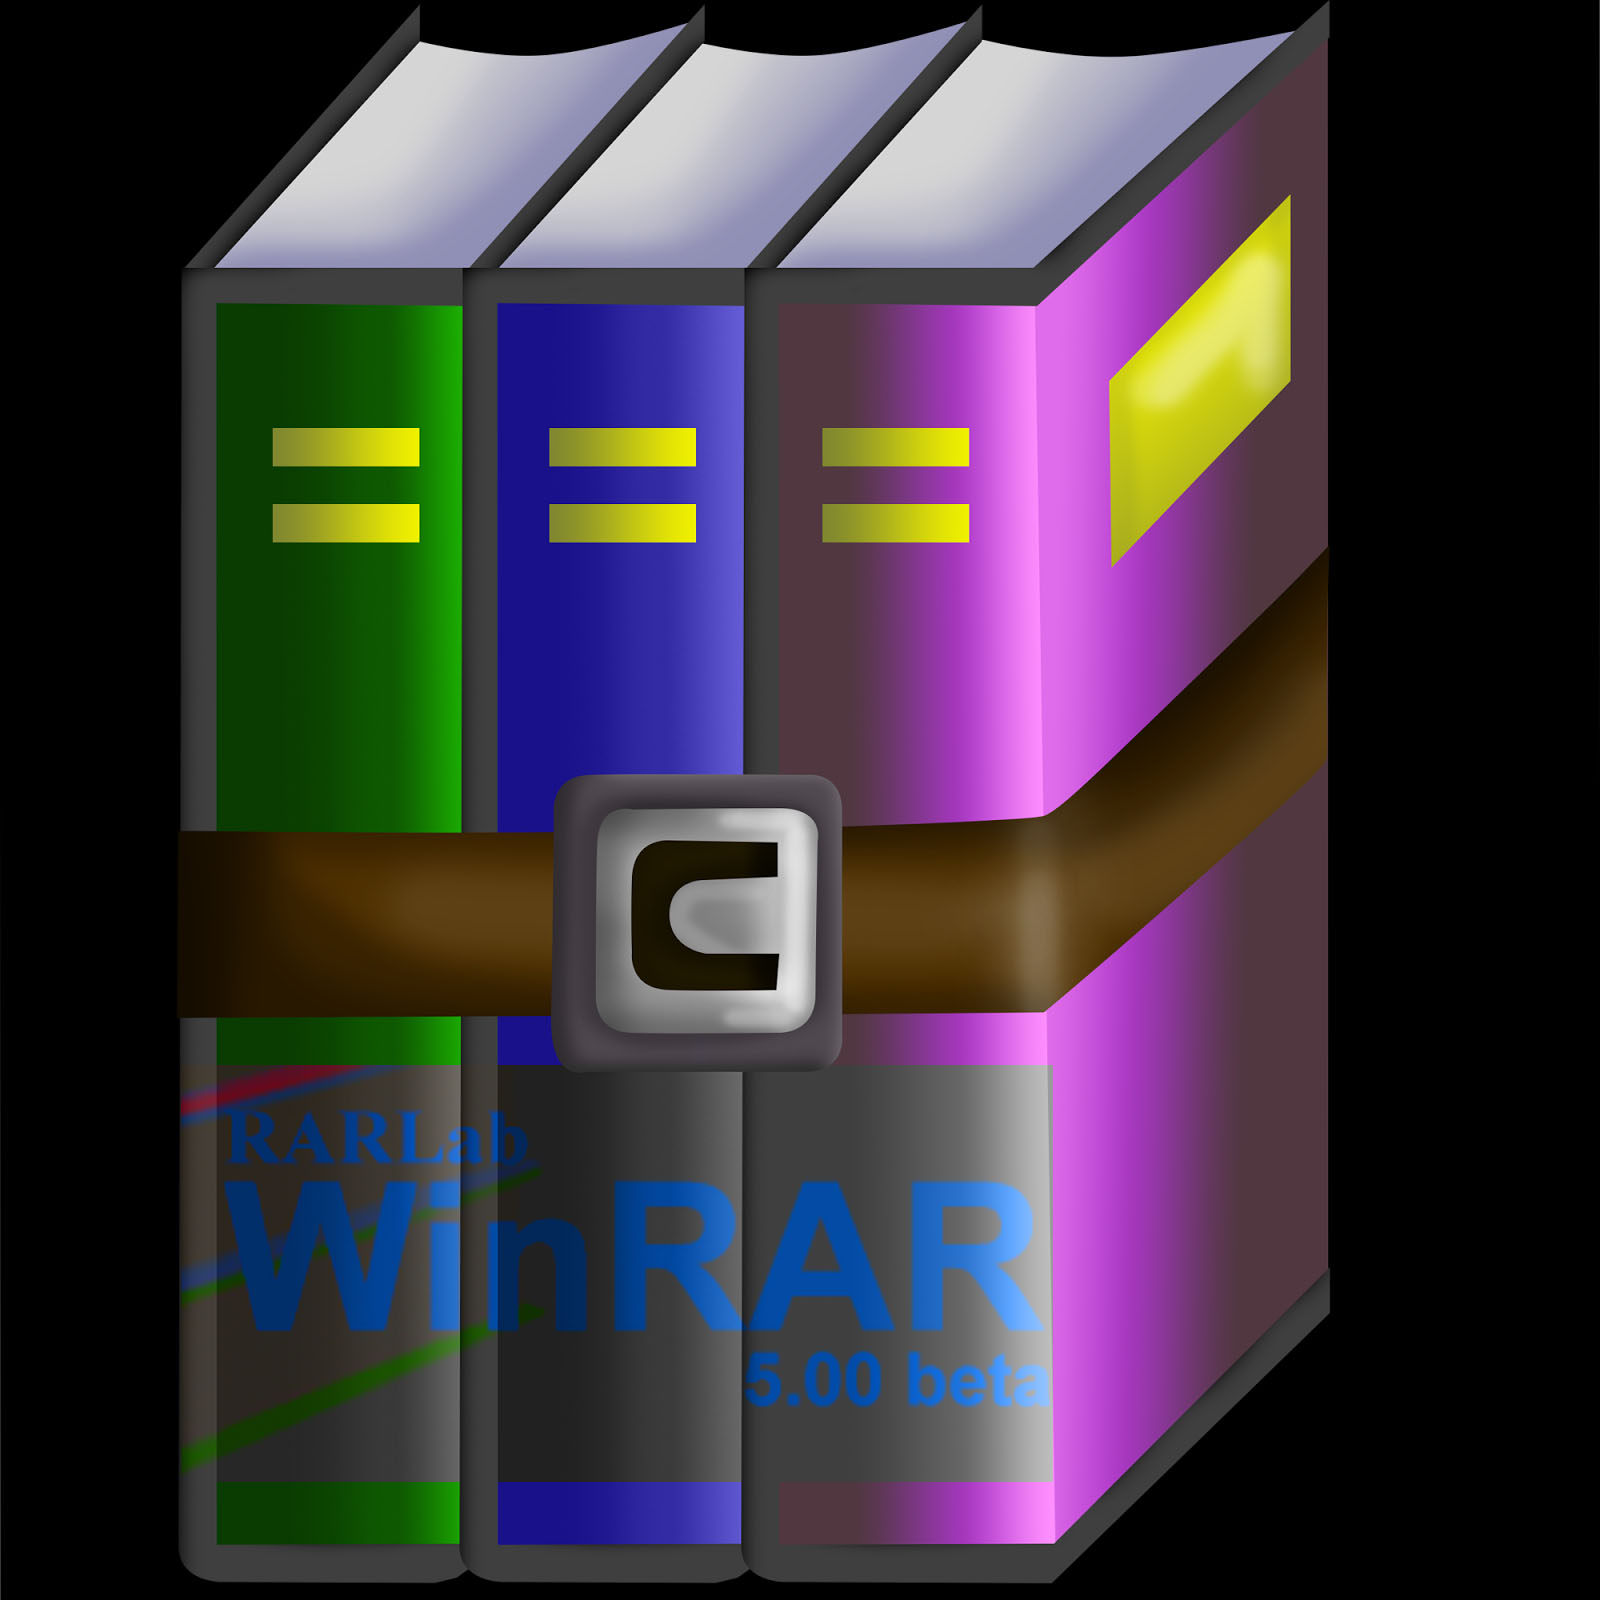 Winrar 4 10 32bit and 64bit - bangnolrarlting's diary